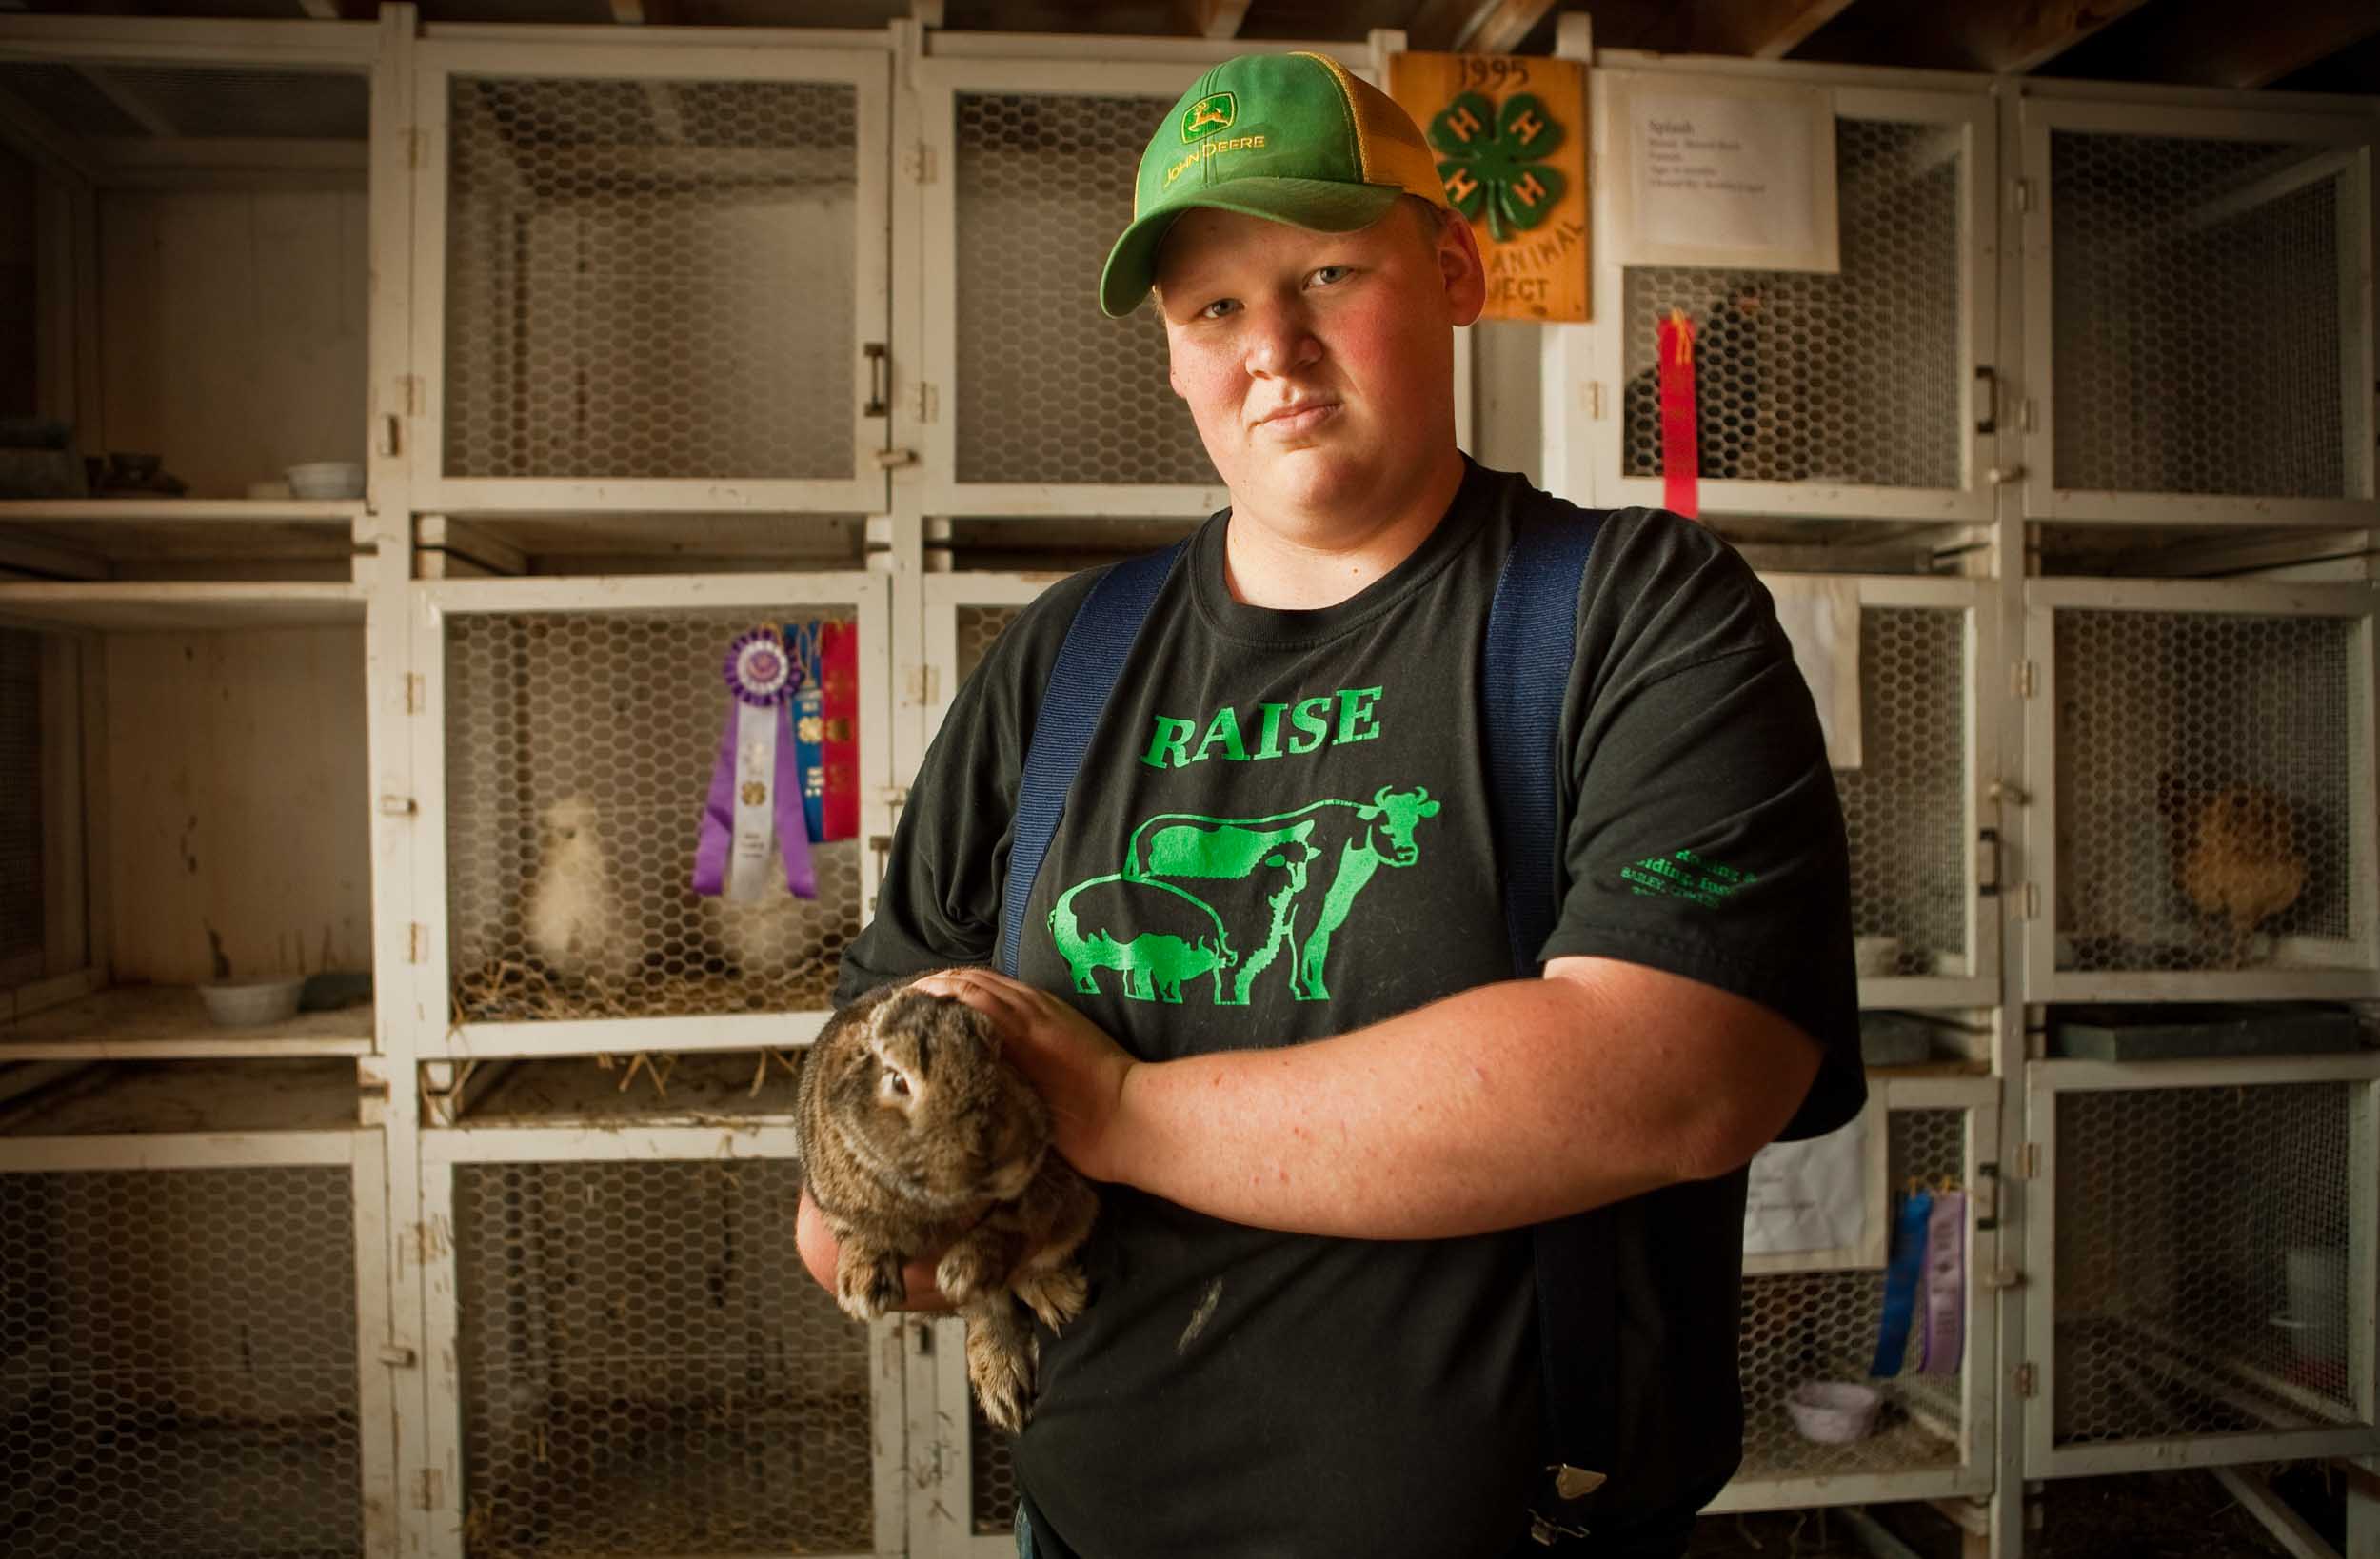 A Farm Boy With HIs Rabbit